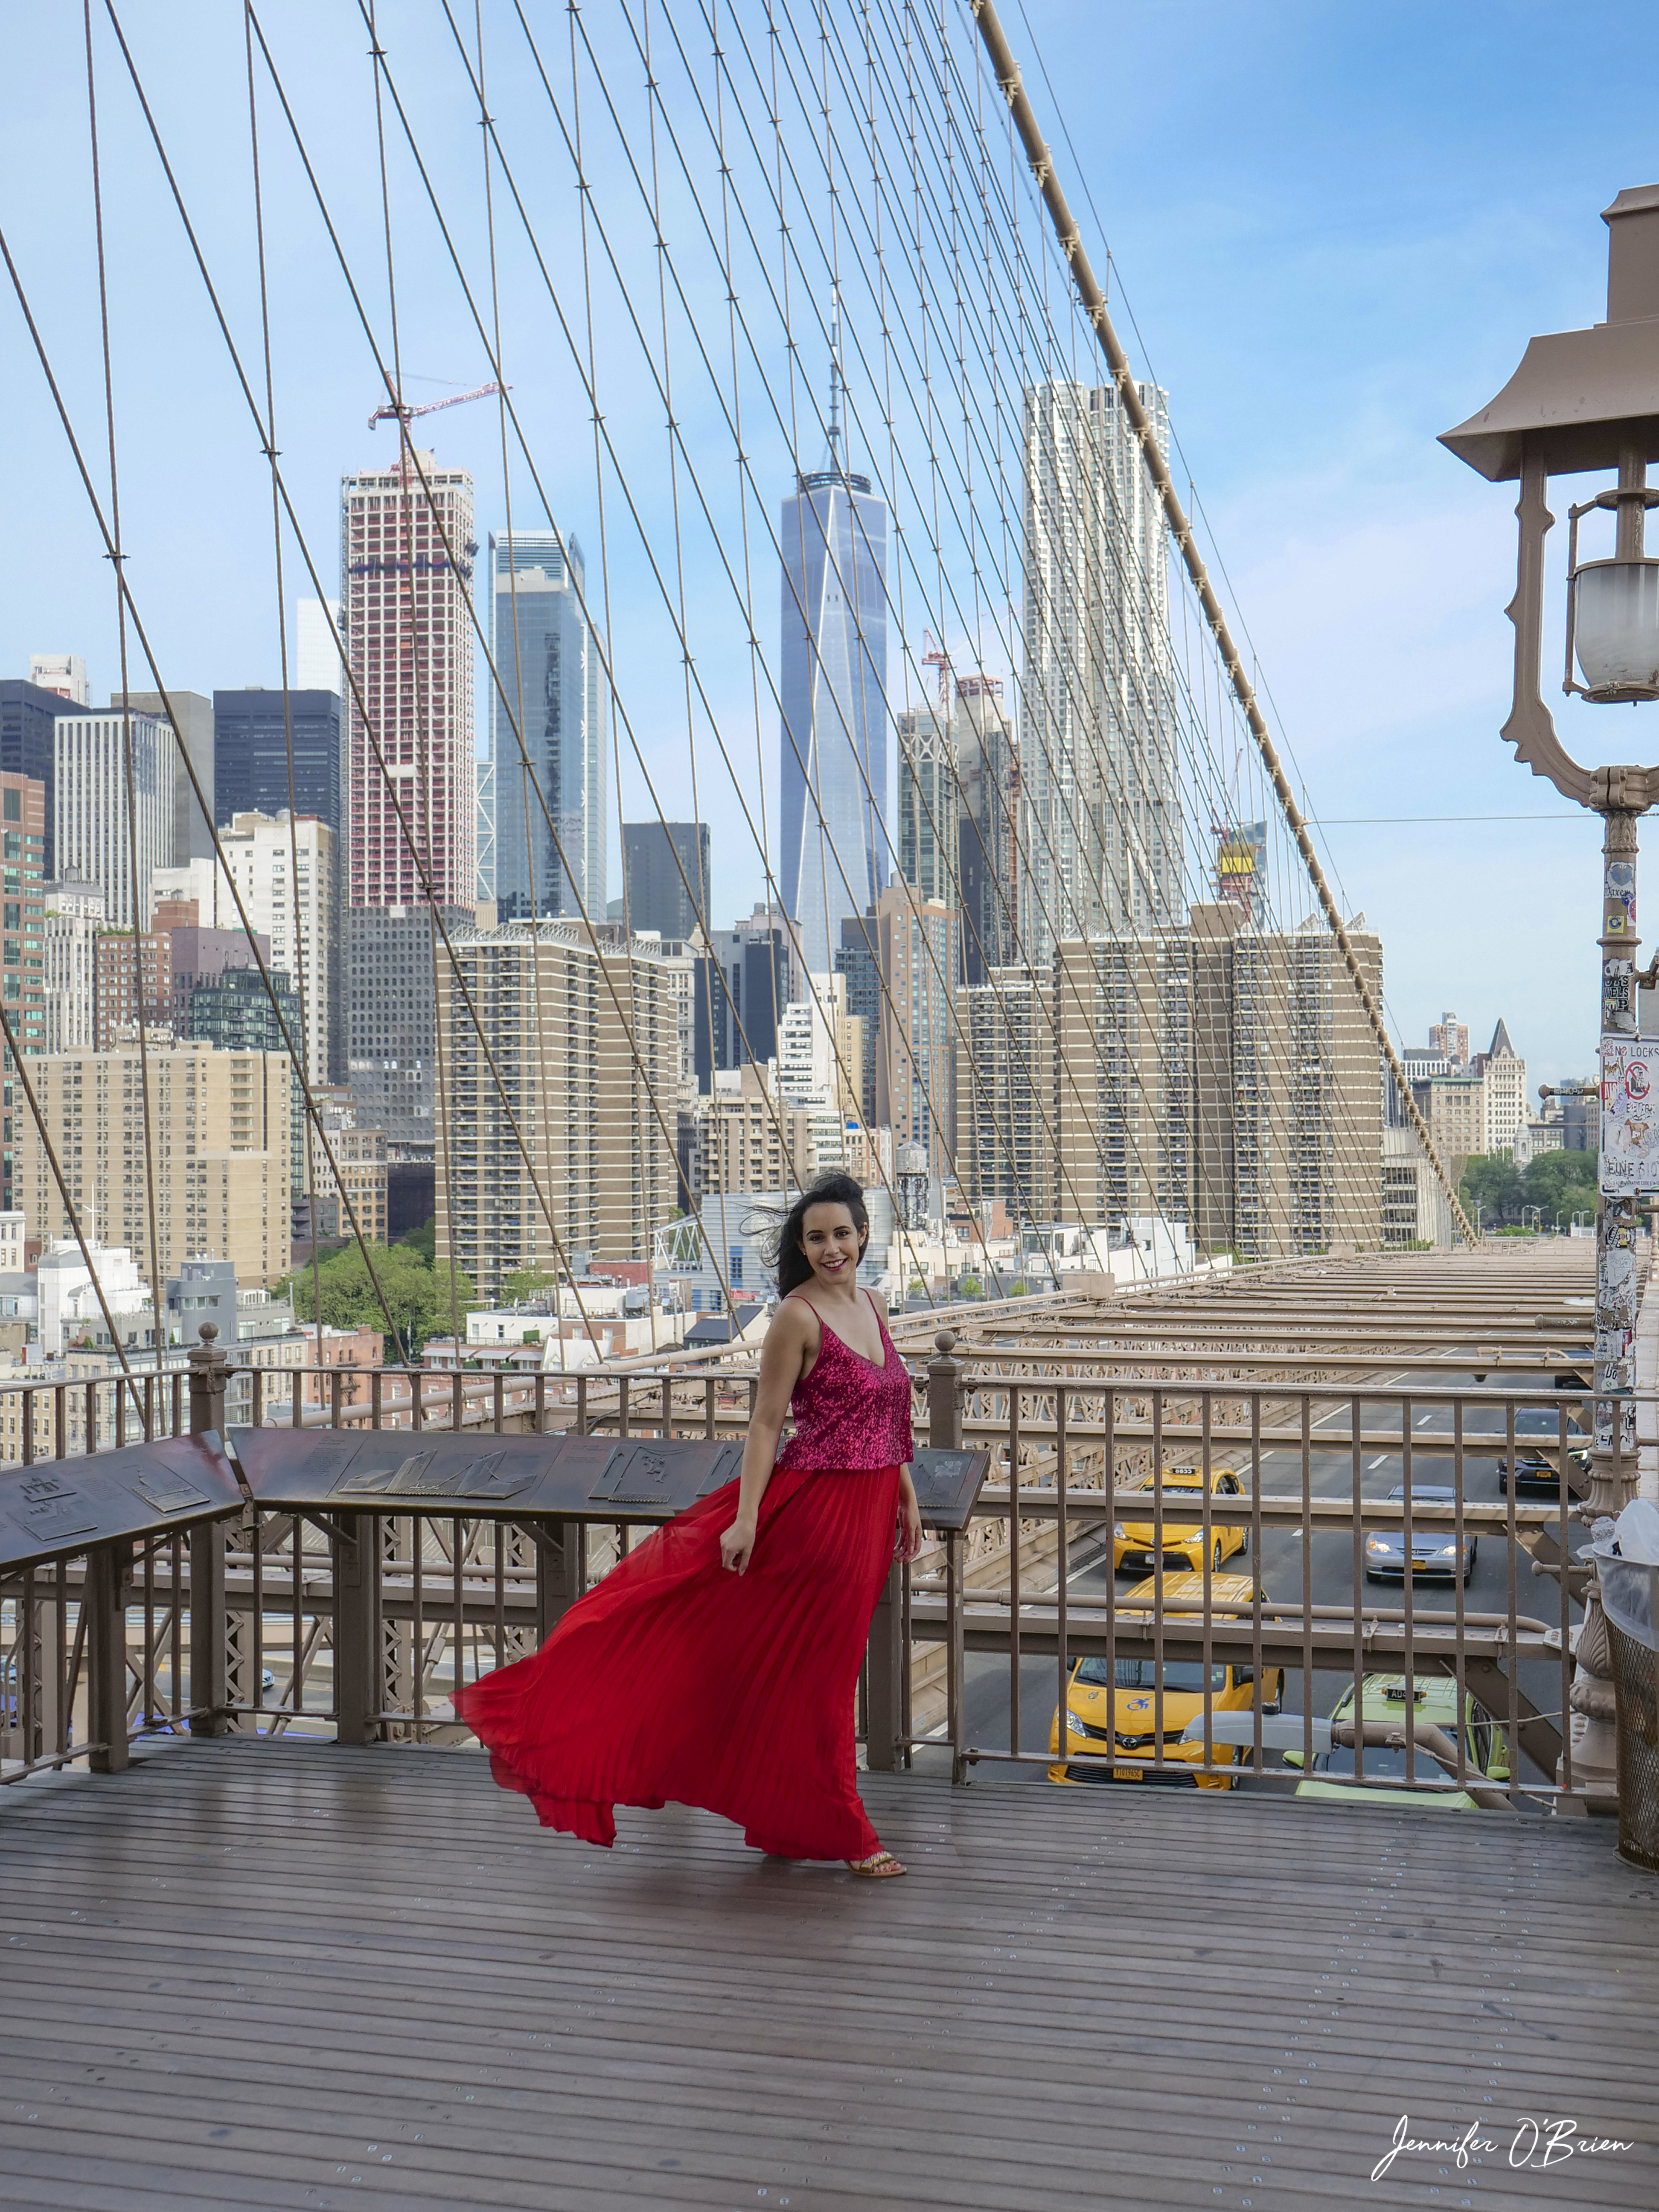 Top Instagram Photos of the Brooklyn Bridge The Travel Women girl in red dress